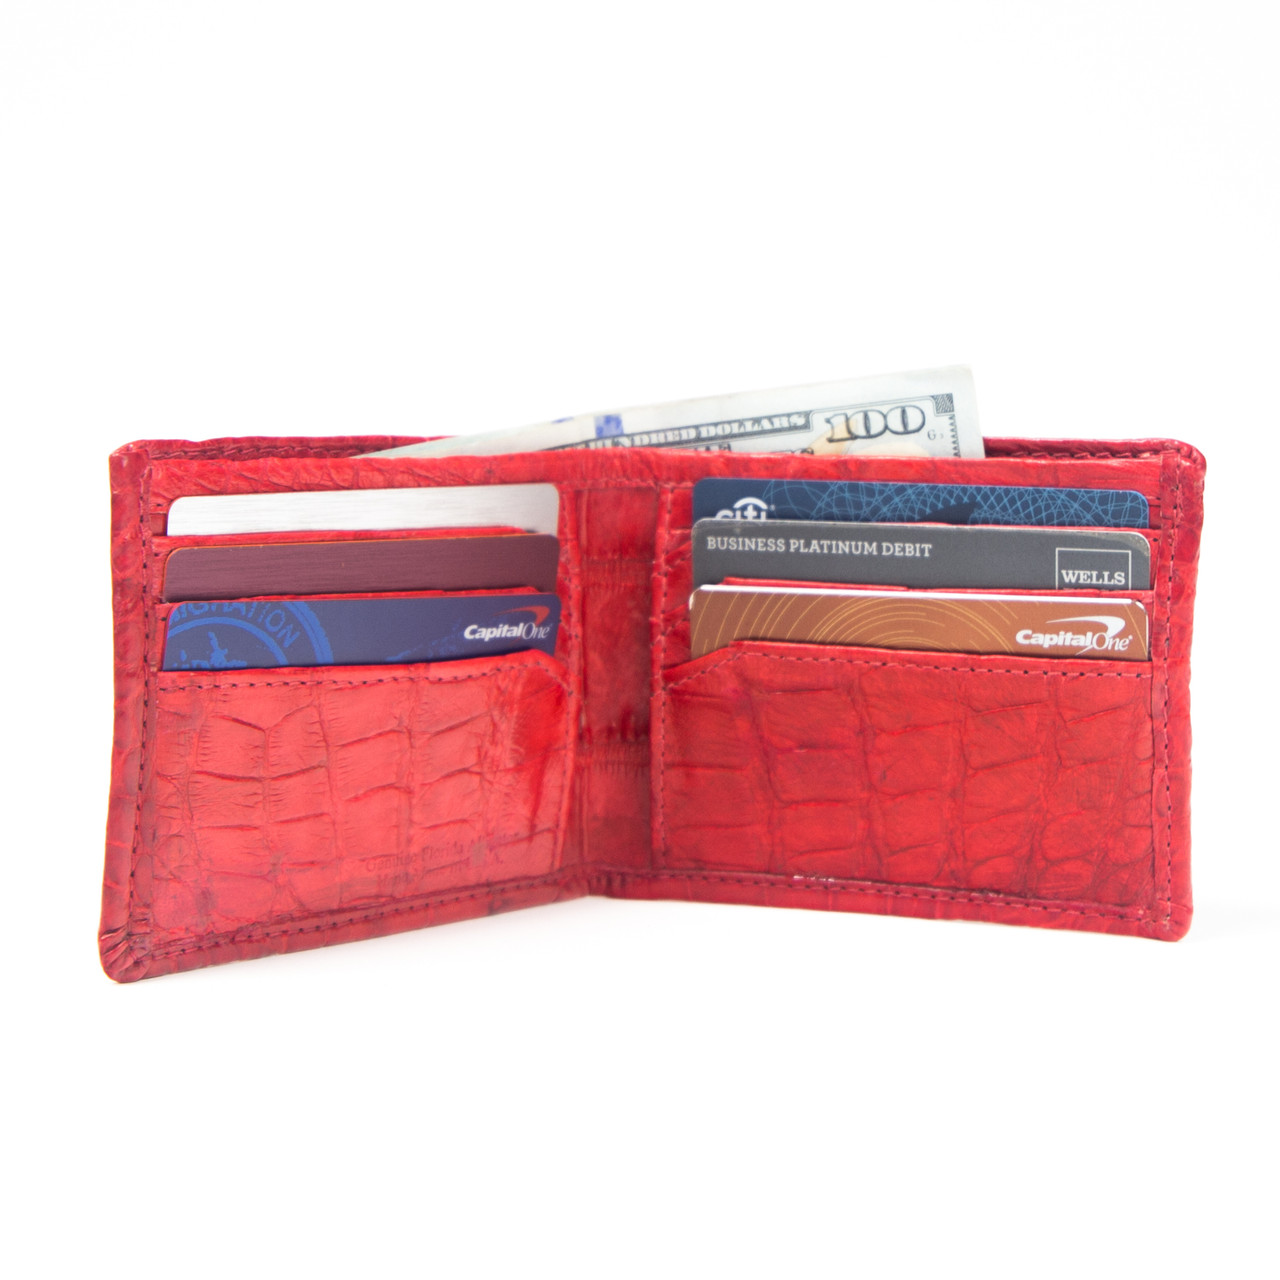 Zippy Wallet XL red shiny alligator